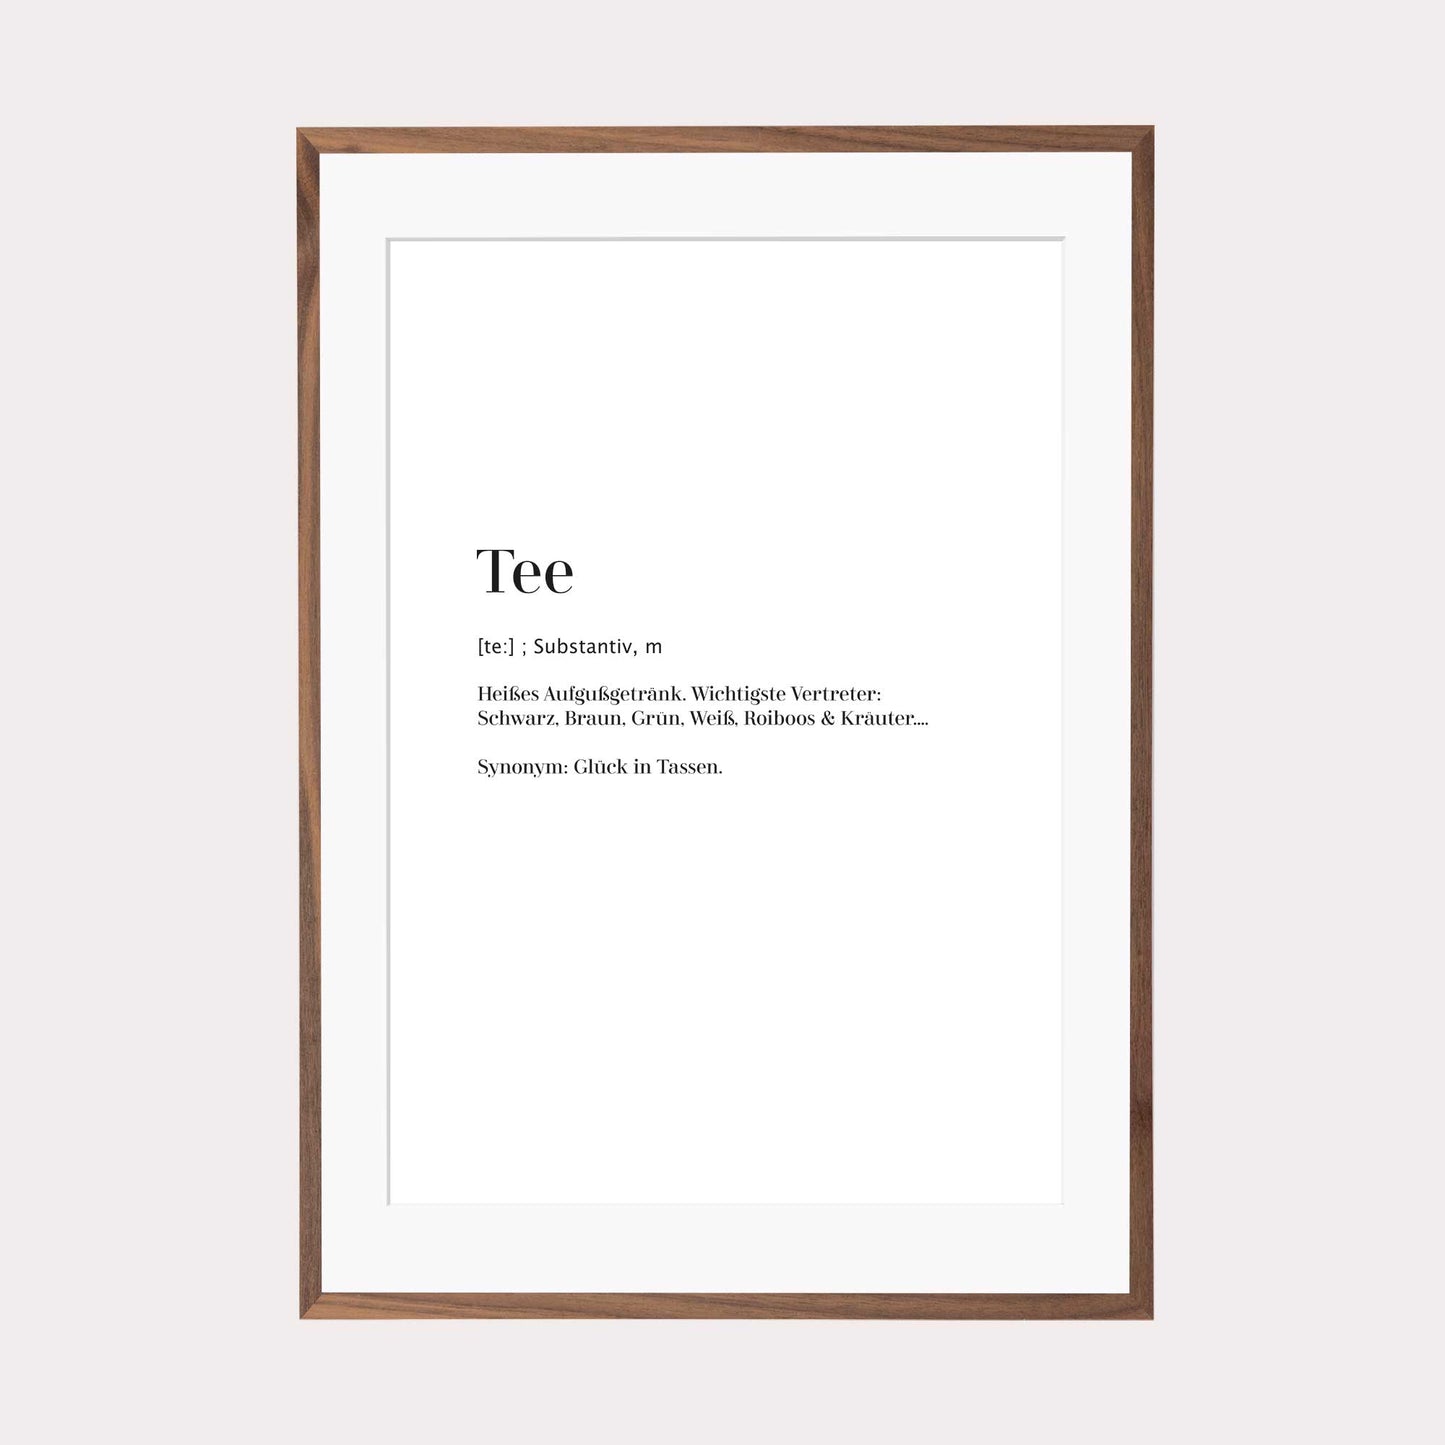 Art Print | Tee - Worterklärung Definition à la Duden